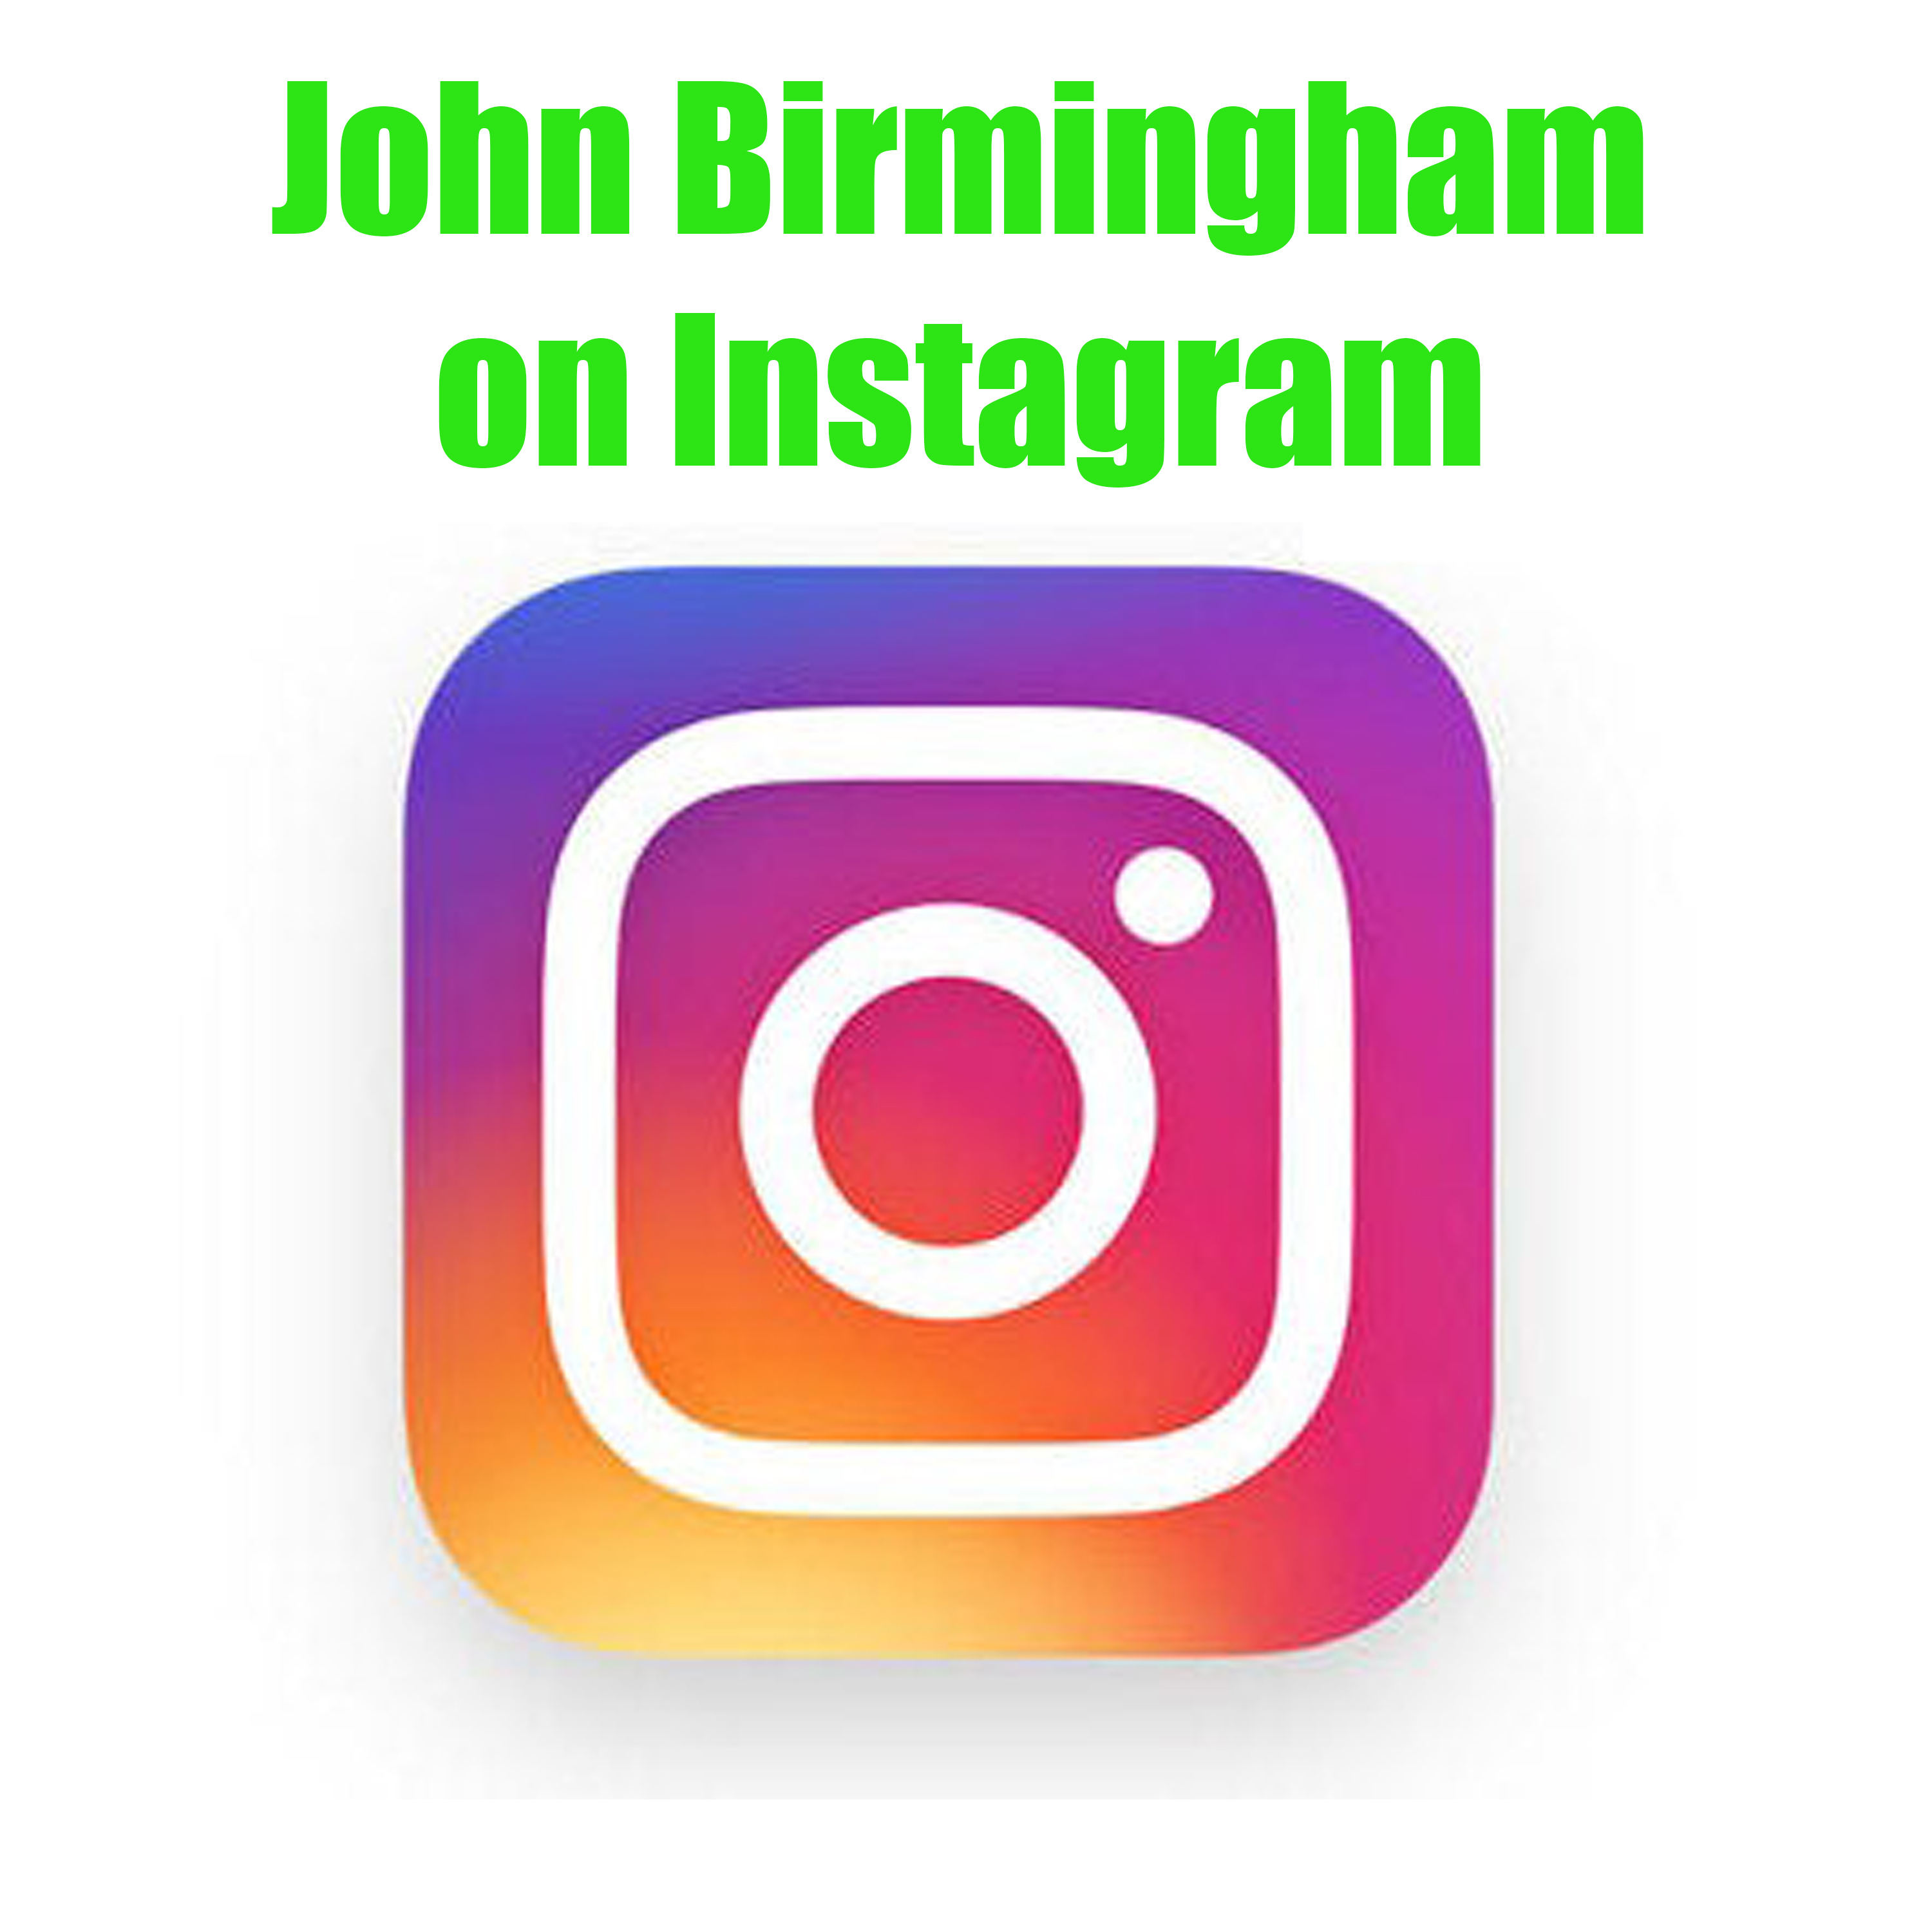 John Birmingham on Instagram